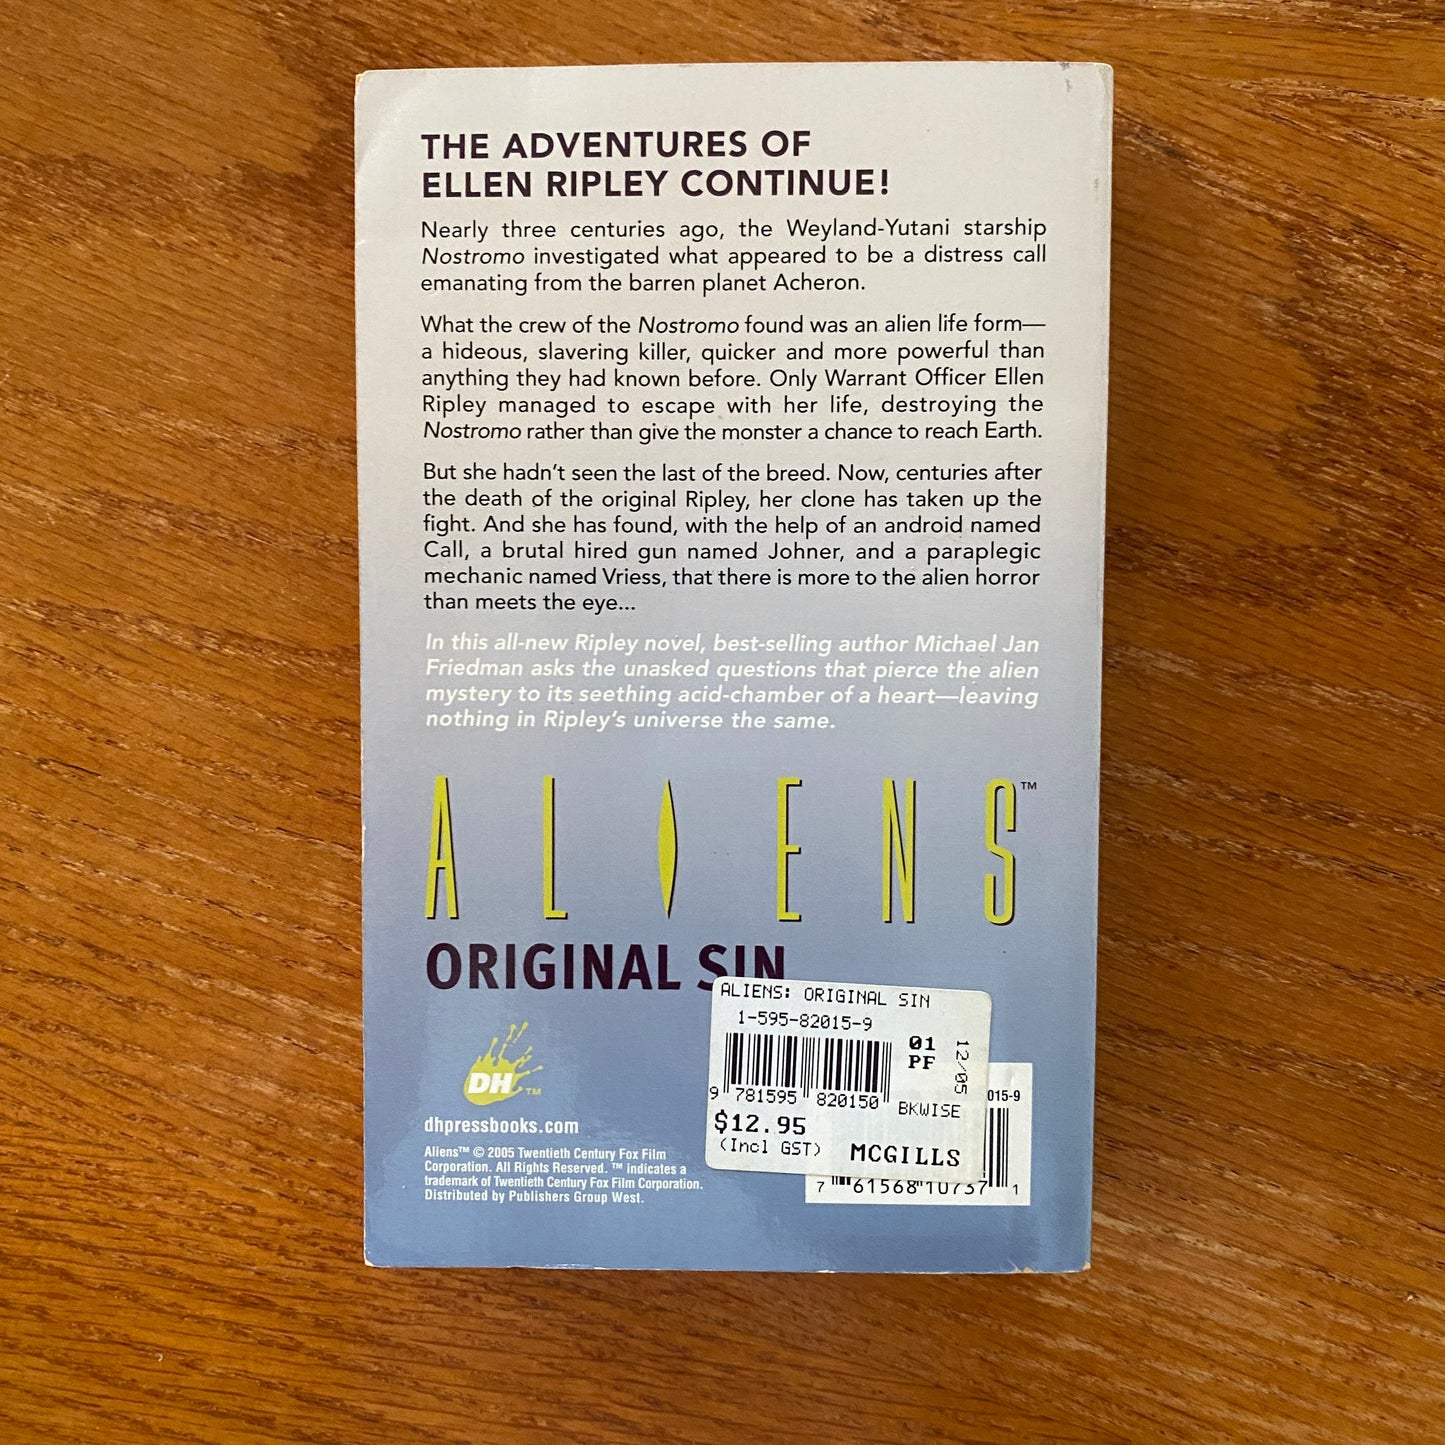 Aliens: Original Sin - Michael Jan Friedman